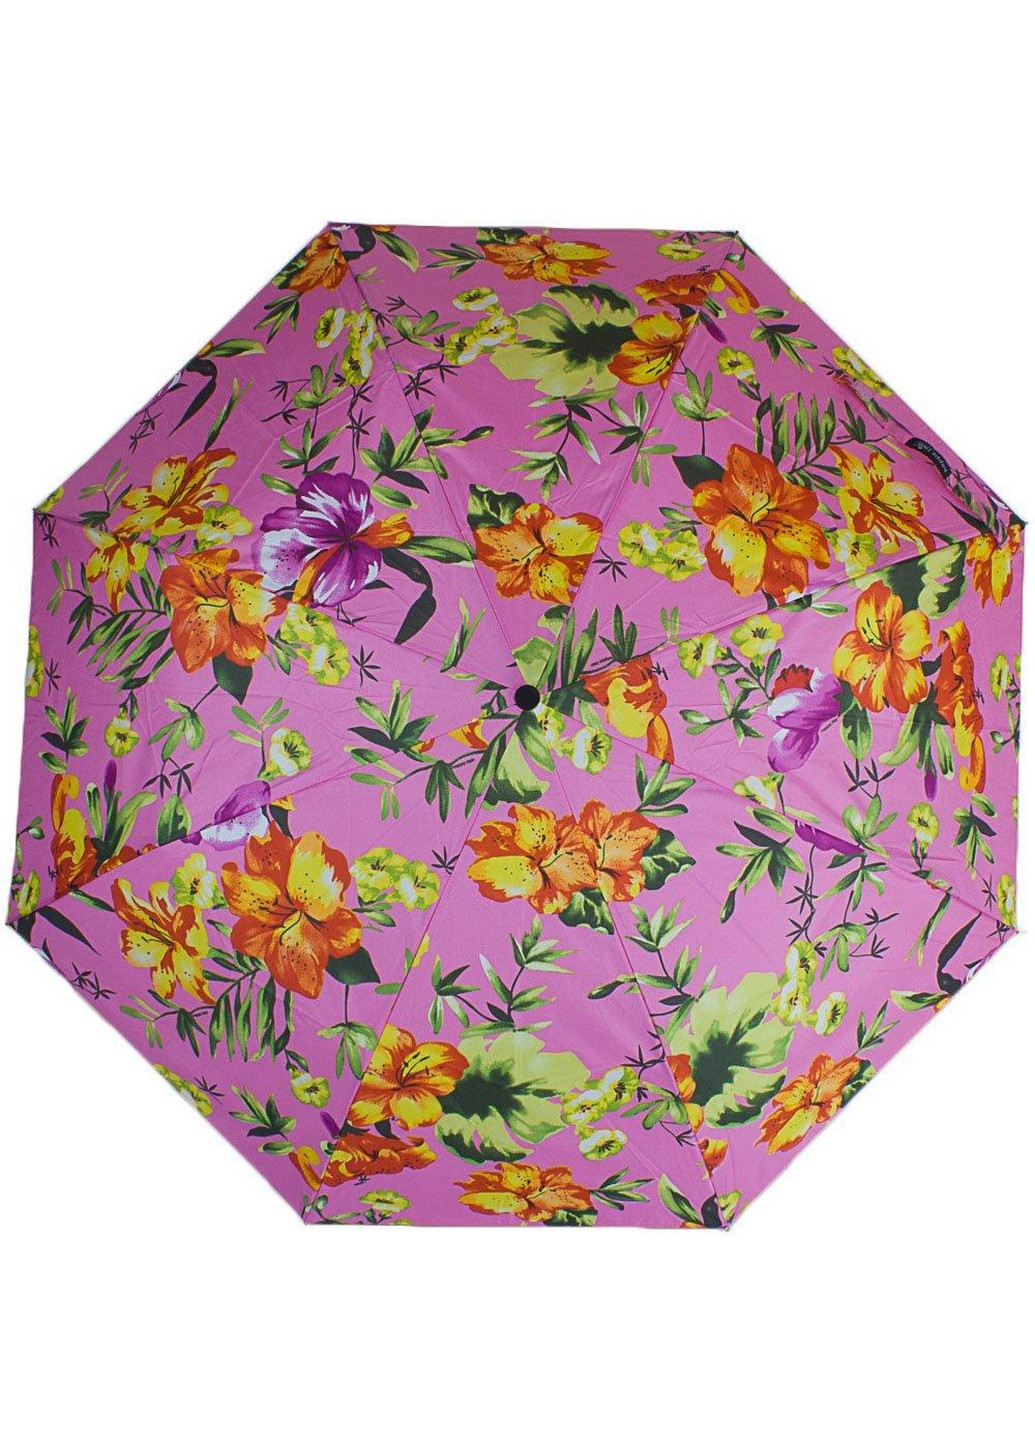 Жіноча складна парасоля напівавтомат 95 см Happy Rain (260330291)